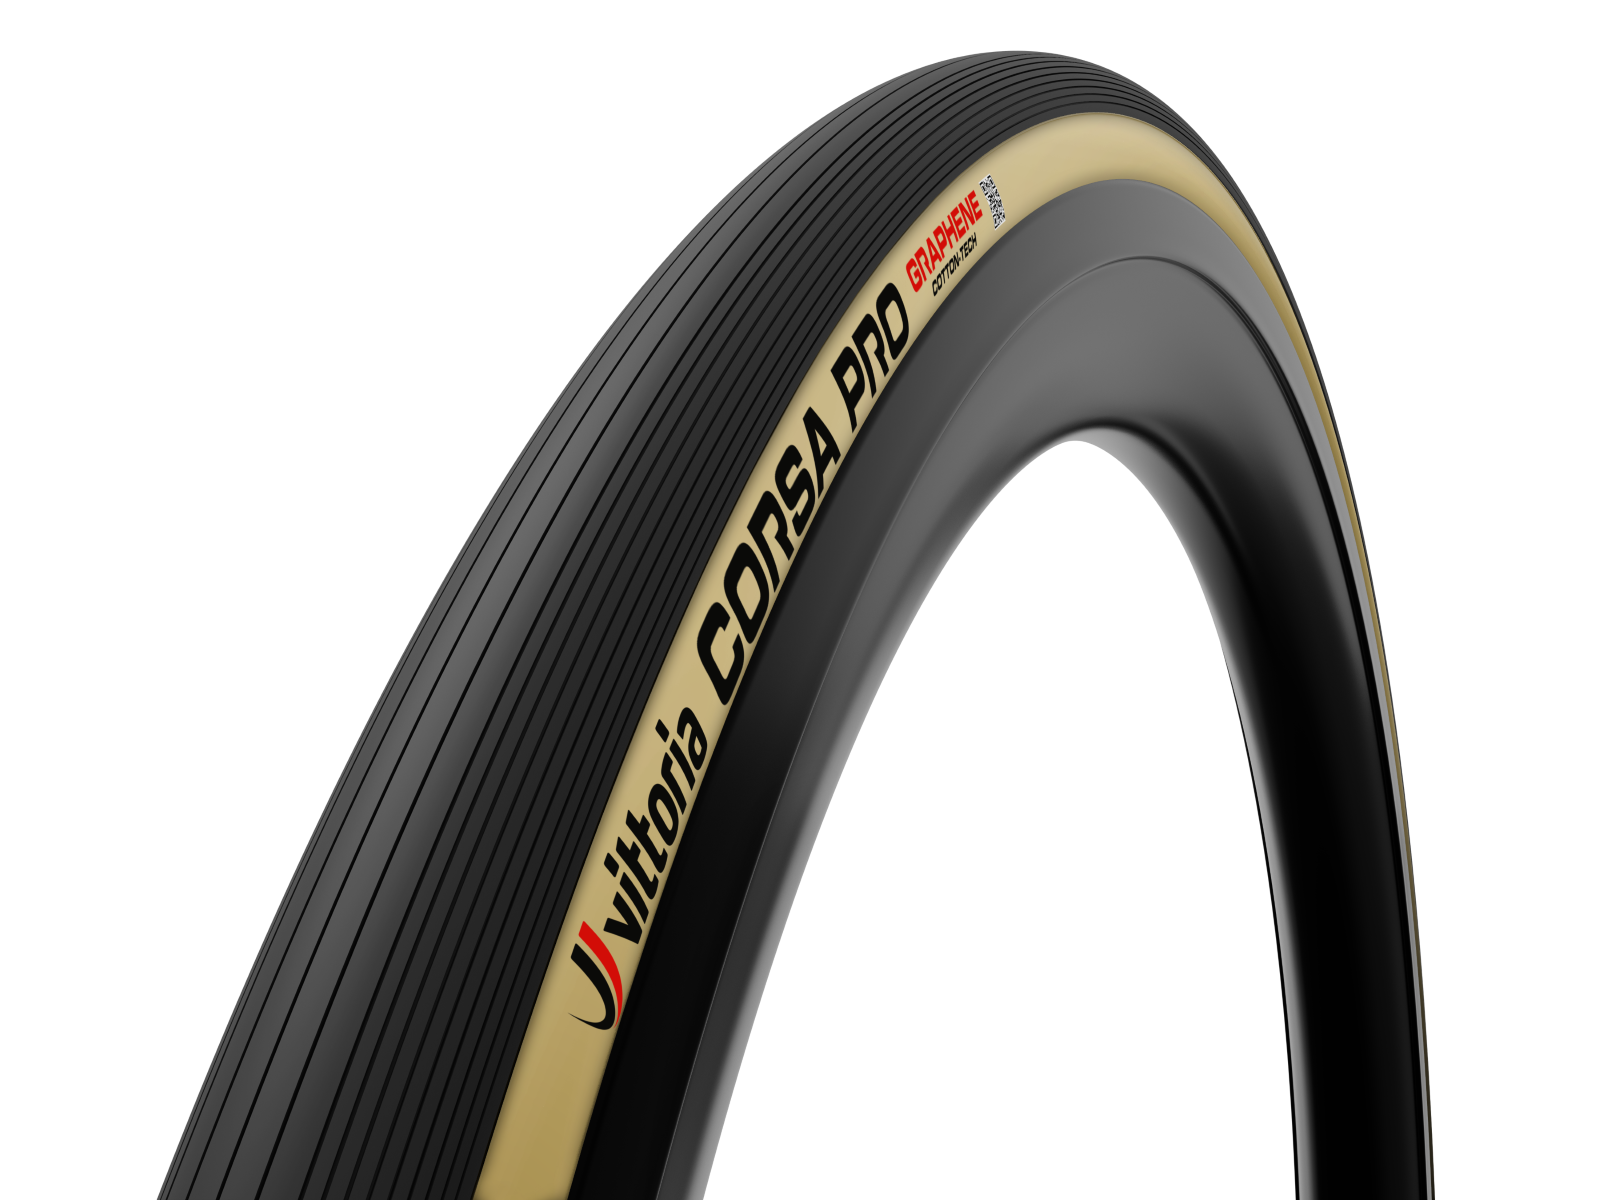 Introducing the new Vittoria Corsa PRO tyre